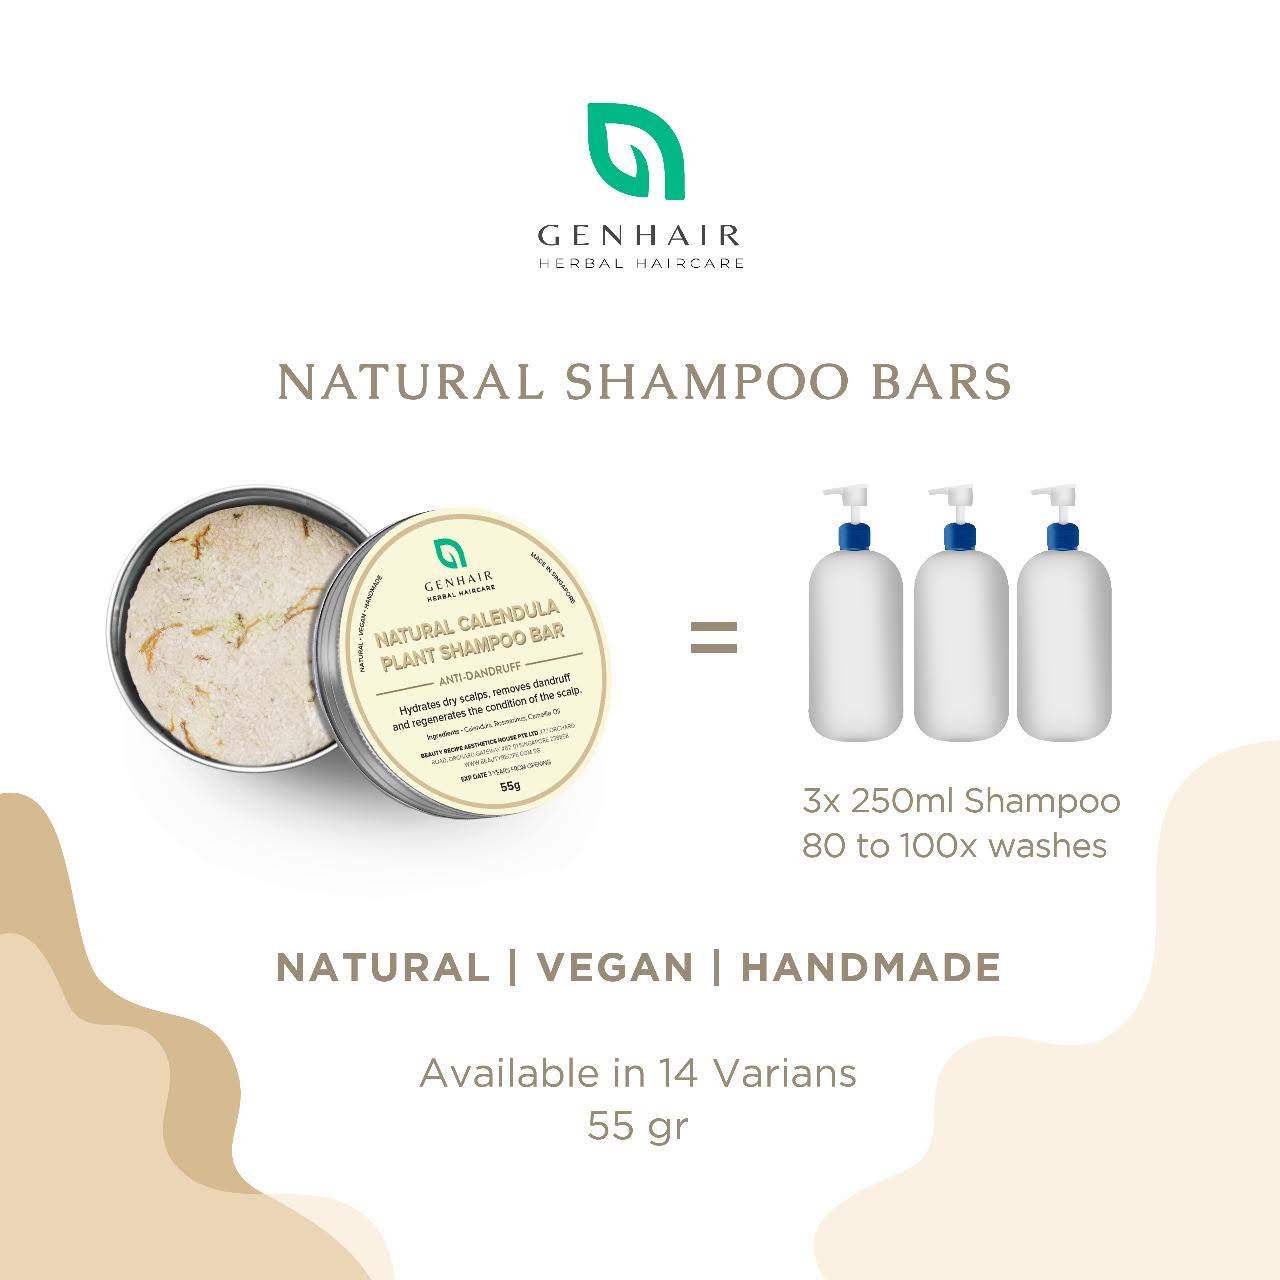 Natural Lemon Shampoo Bar - Faster Hair Growth